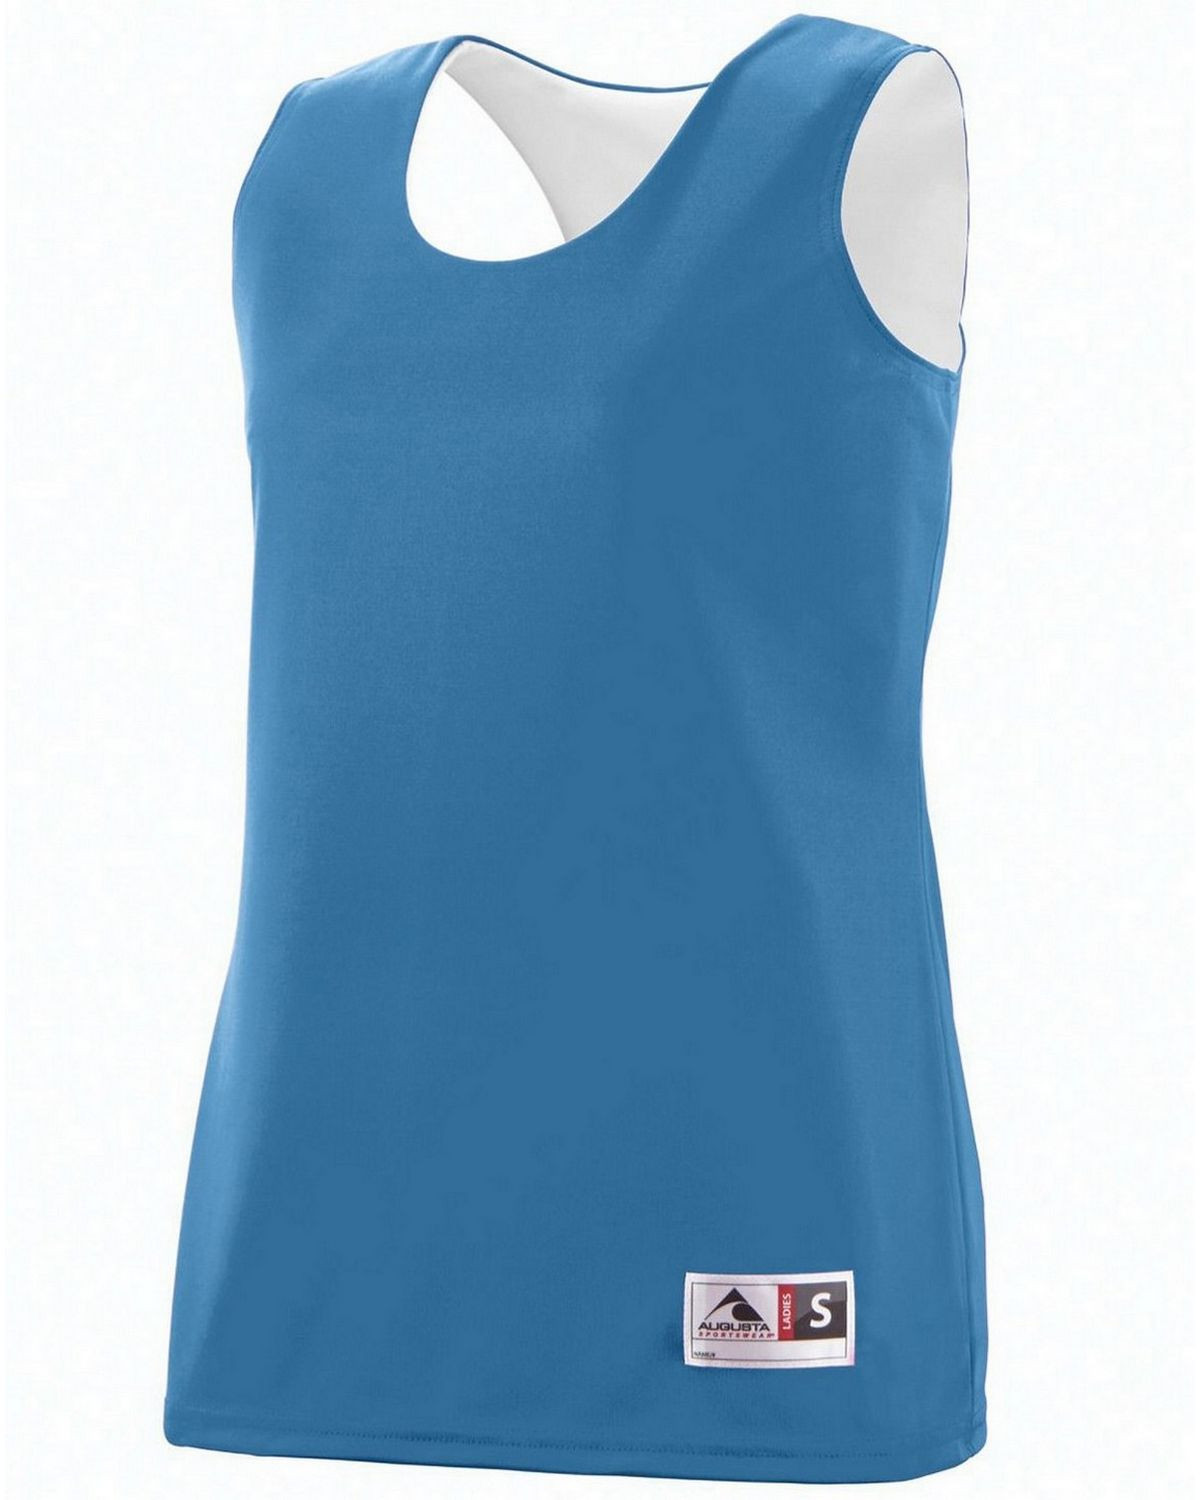 Augusta Sportswear 147 Women's Wicking Polyester Reversible Sleeveless Jersey - Columbia Blue/White - S #sleeveless